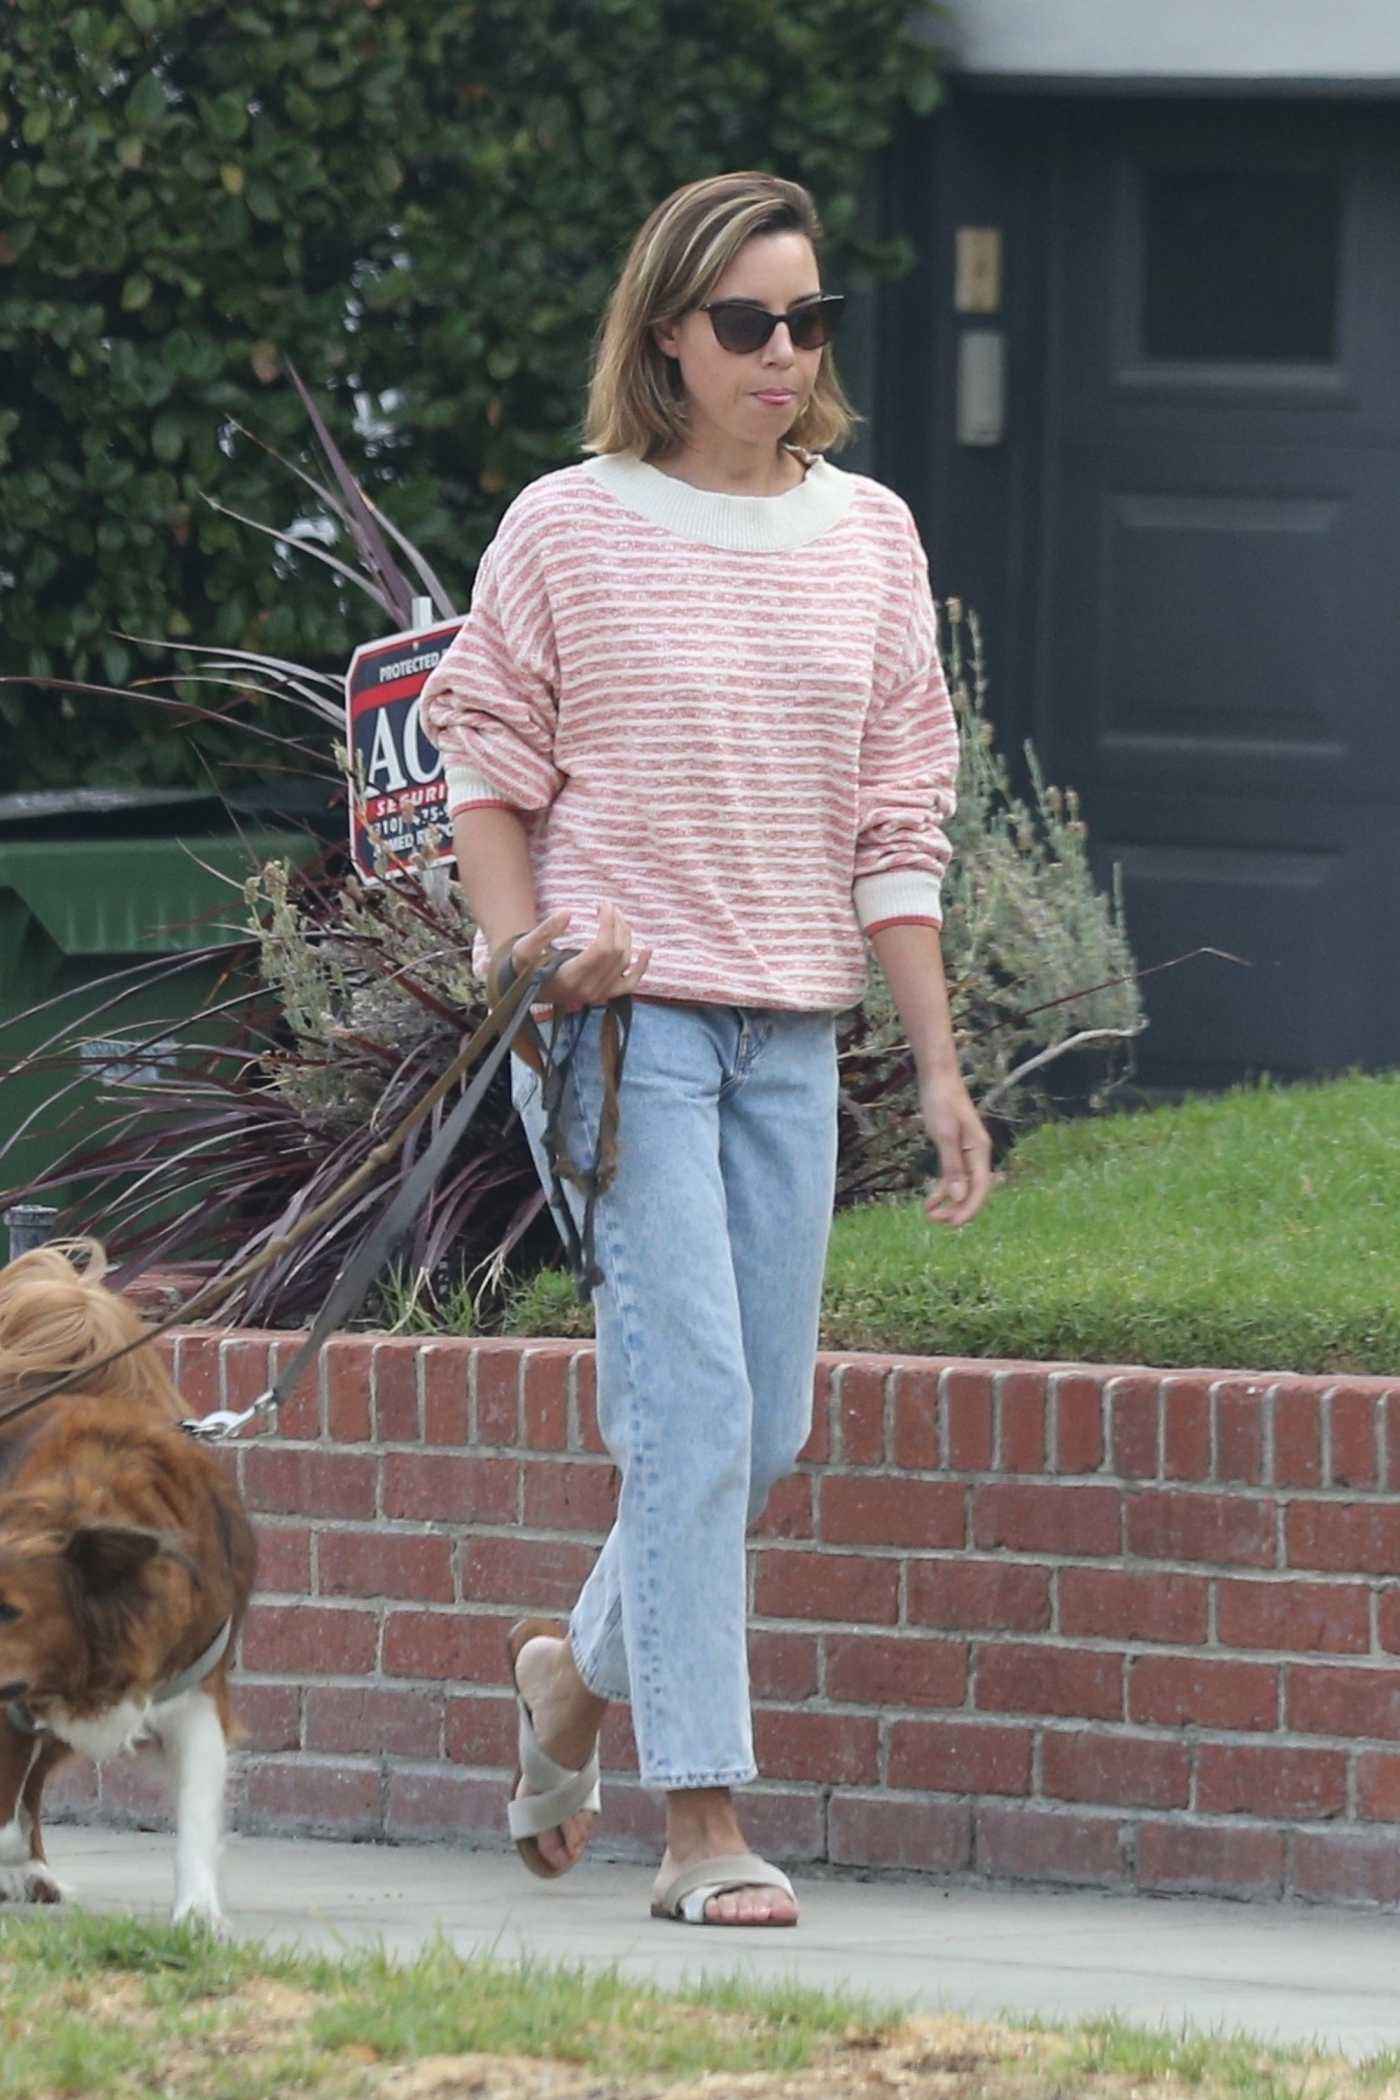 Aubrey Plaza in a Pink Striped Sweater Walks Her Dogs in Los Feliz 08/23/2021